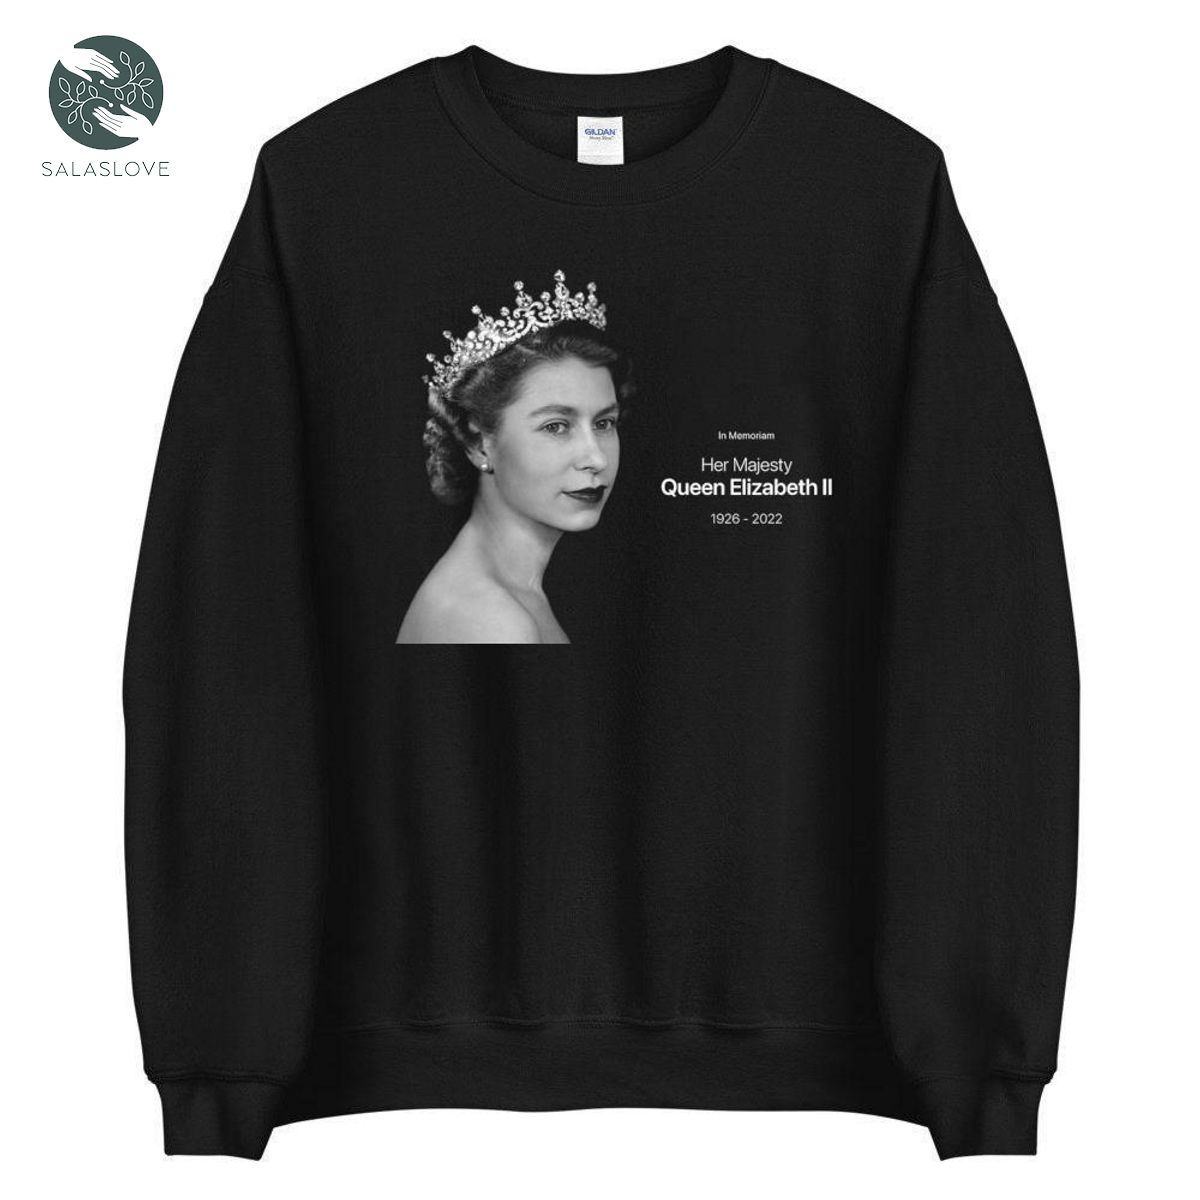 British Queen Platinum Jubilee 70th Anniversary T-Shirt